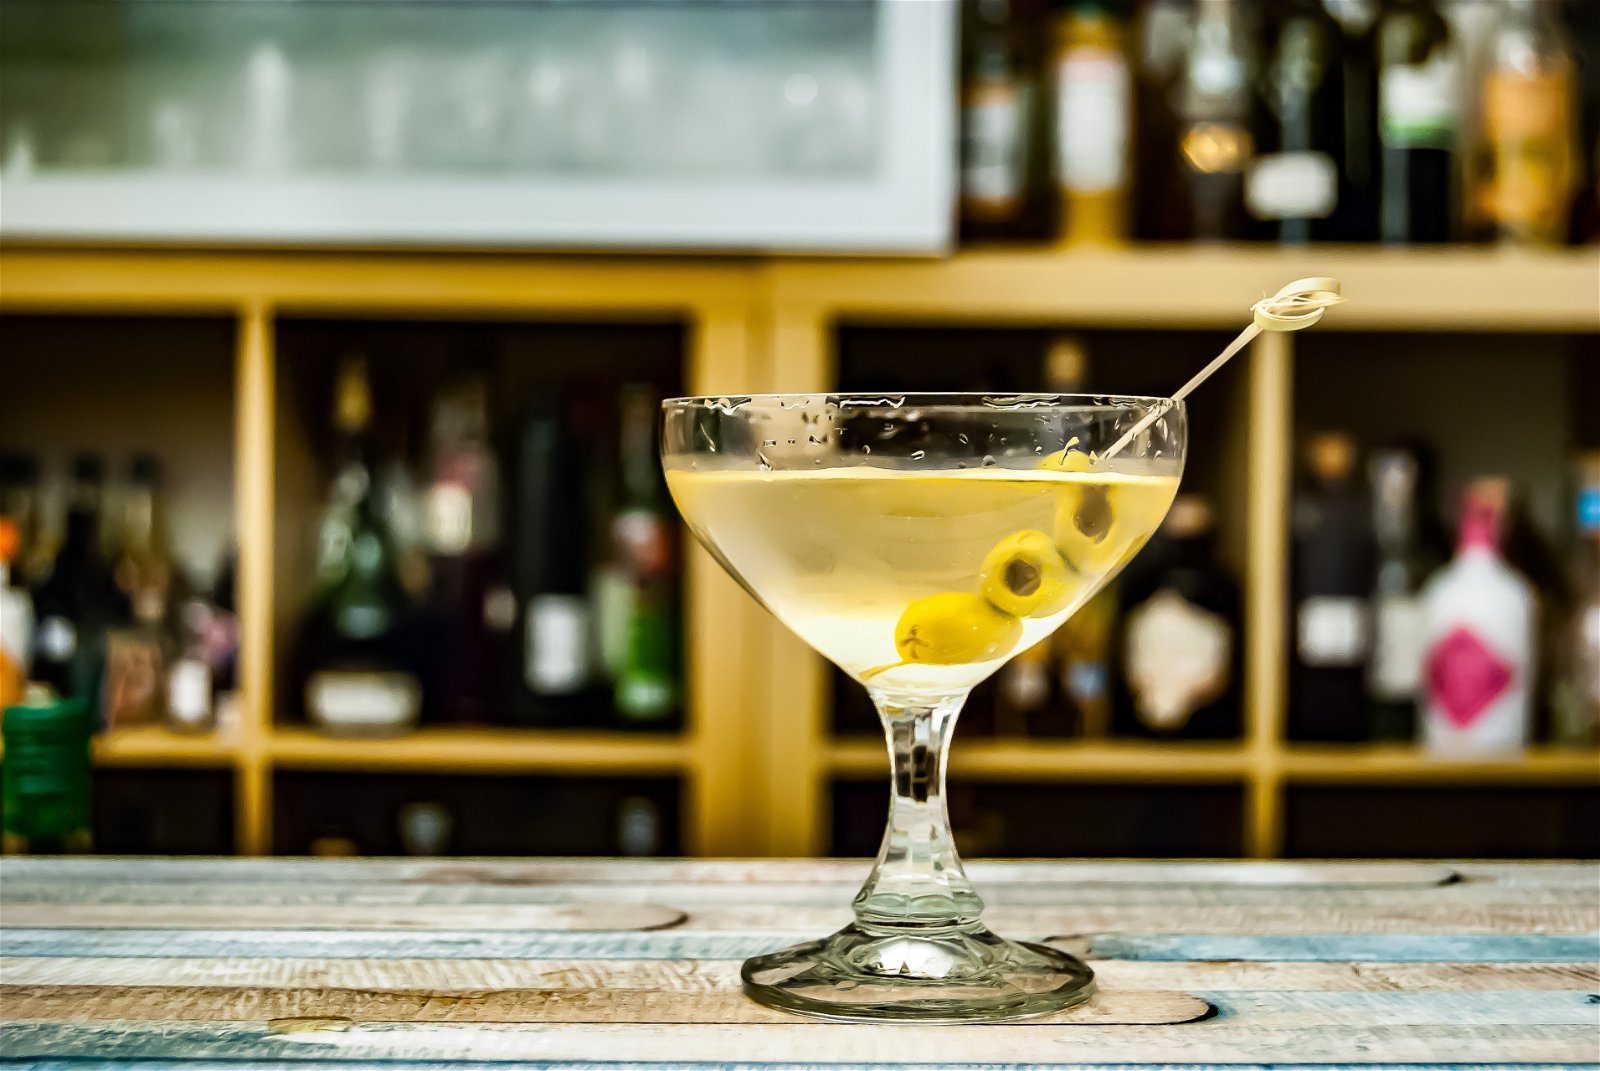 Den klassiske 007 drink - Dry Martini